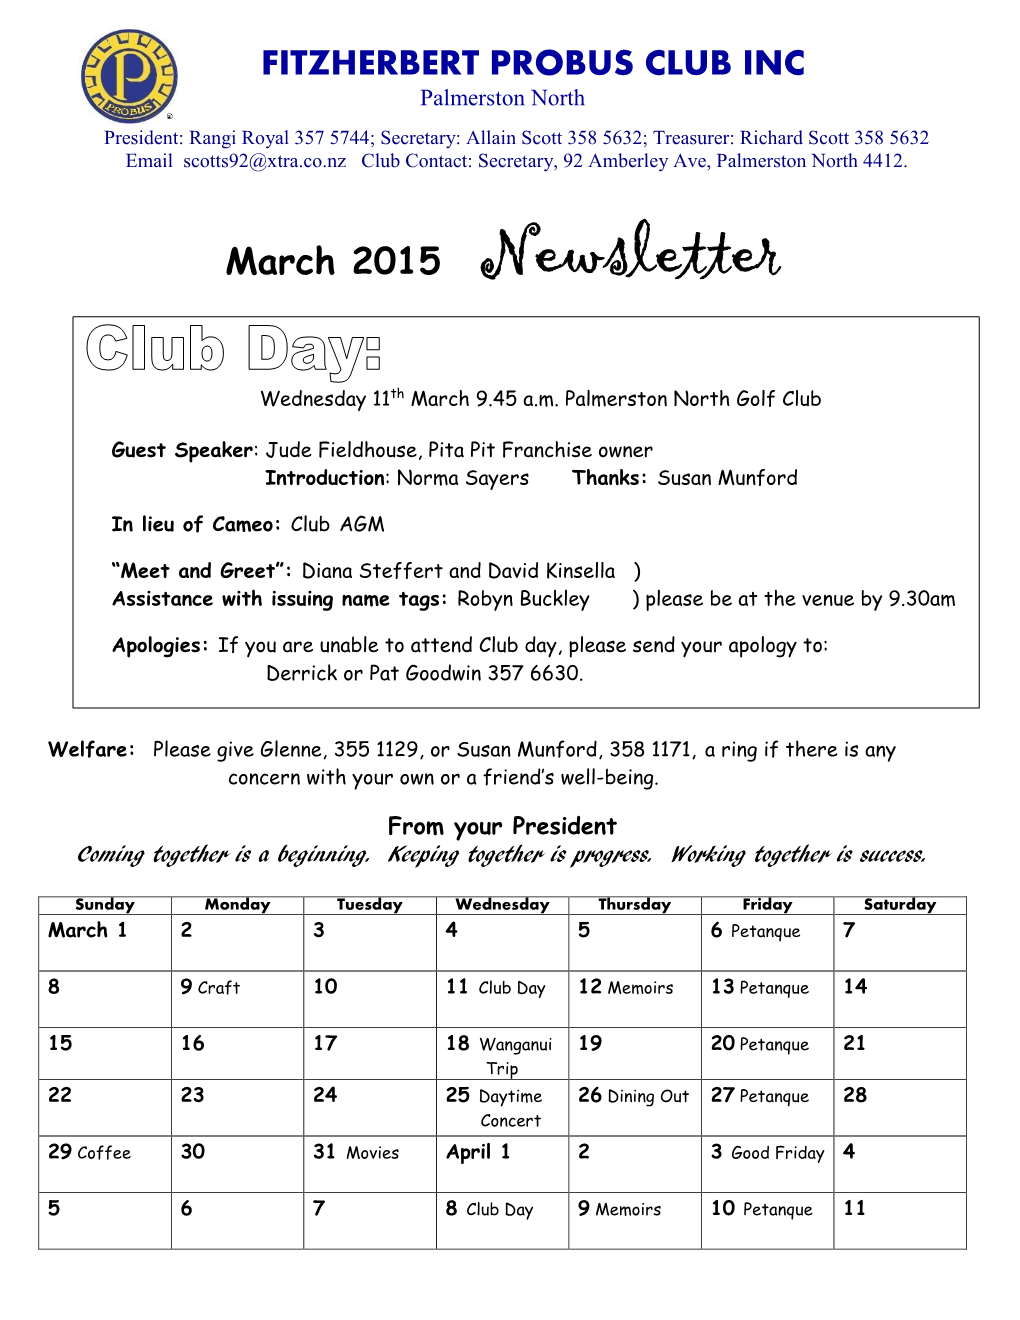 FITZHERBERT PROBUS CLUB INC March 2015 Newsletter